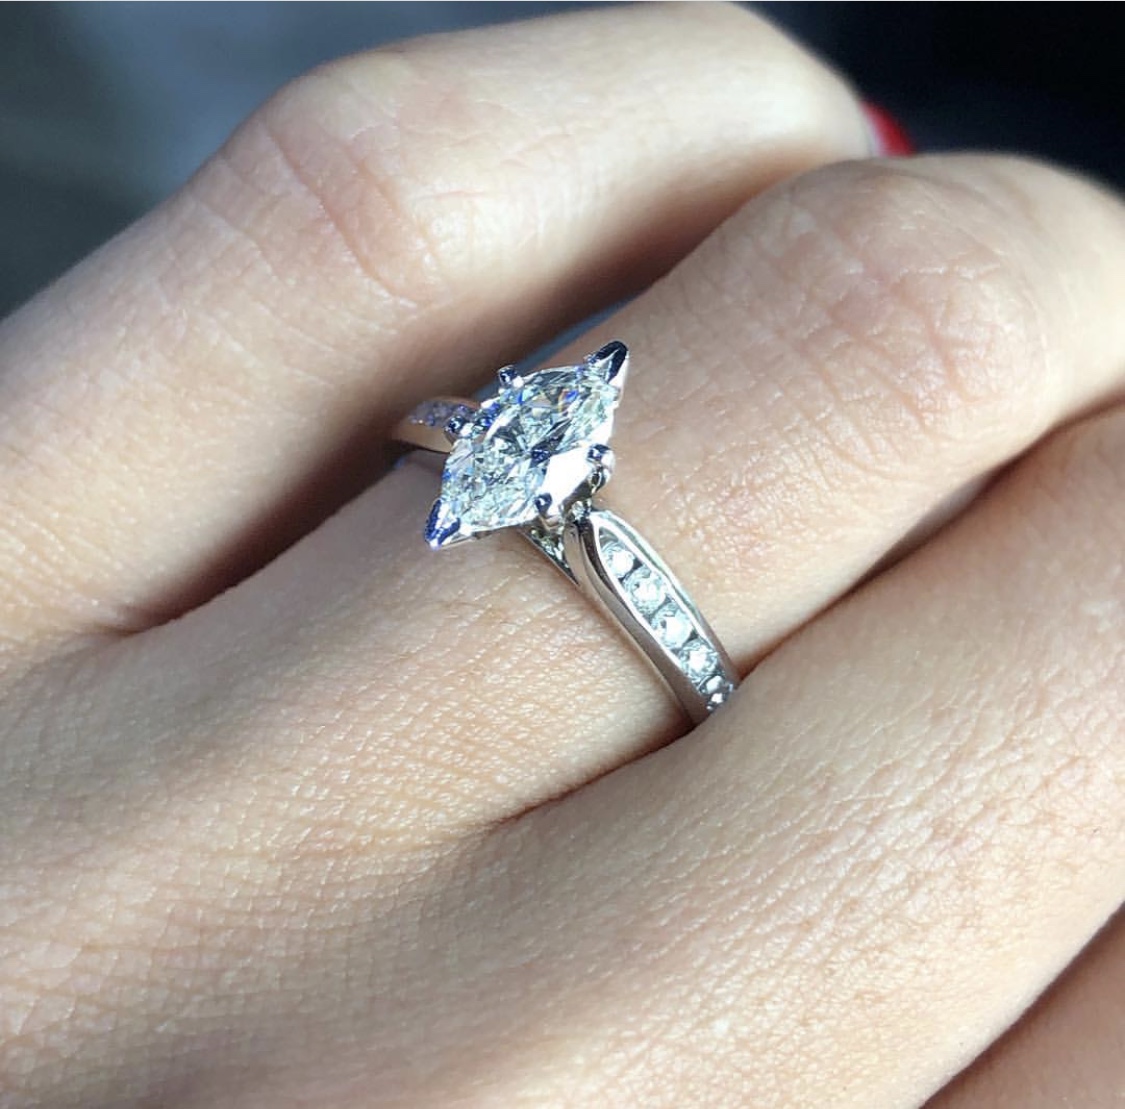 Marquise diamond engagement ring on diamond band